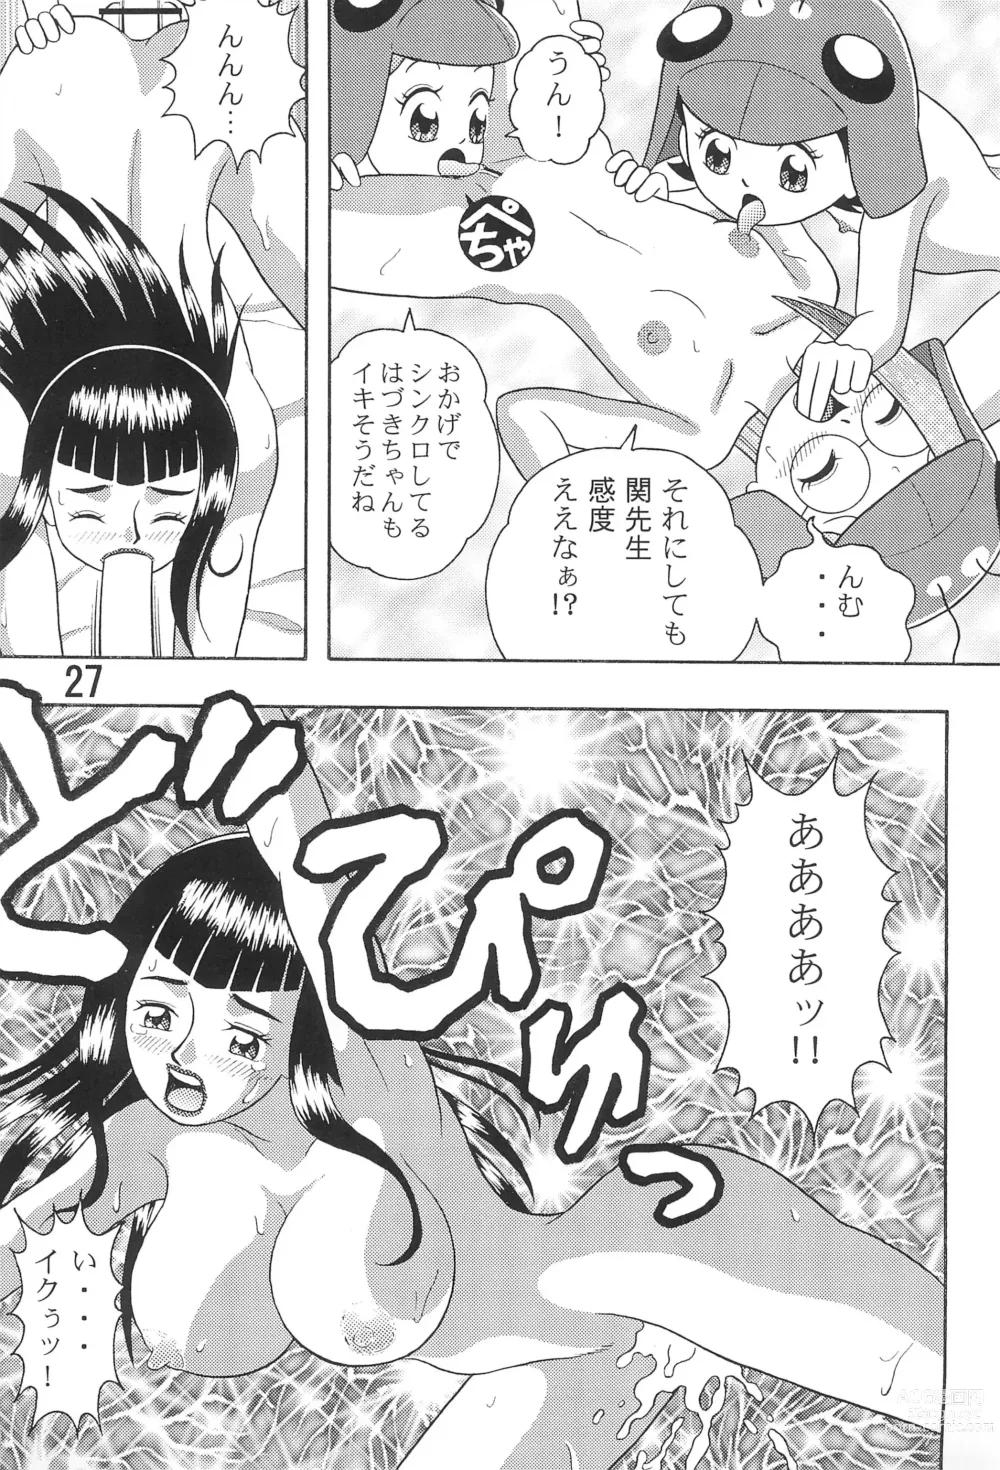 Page 29 of doujinshi 5 Nen 1 Kumi Mahougumi 2